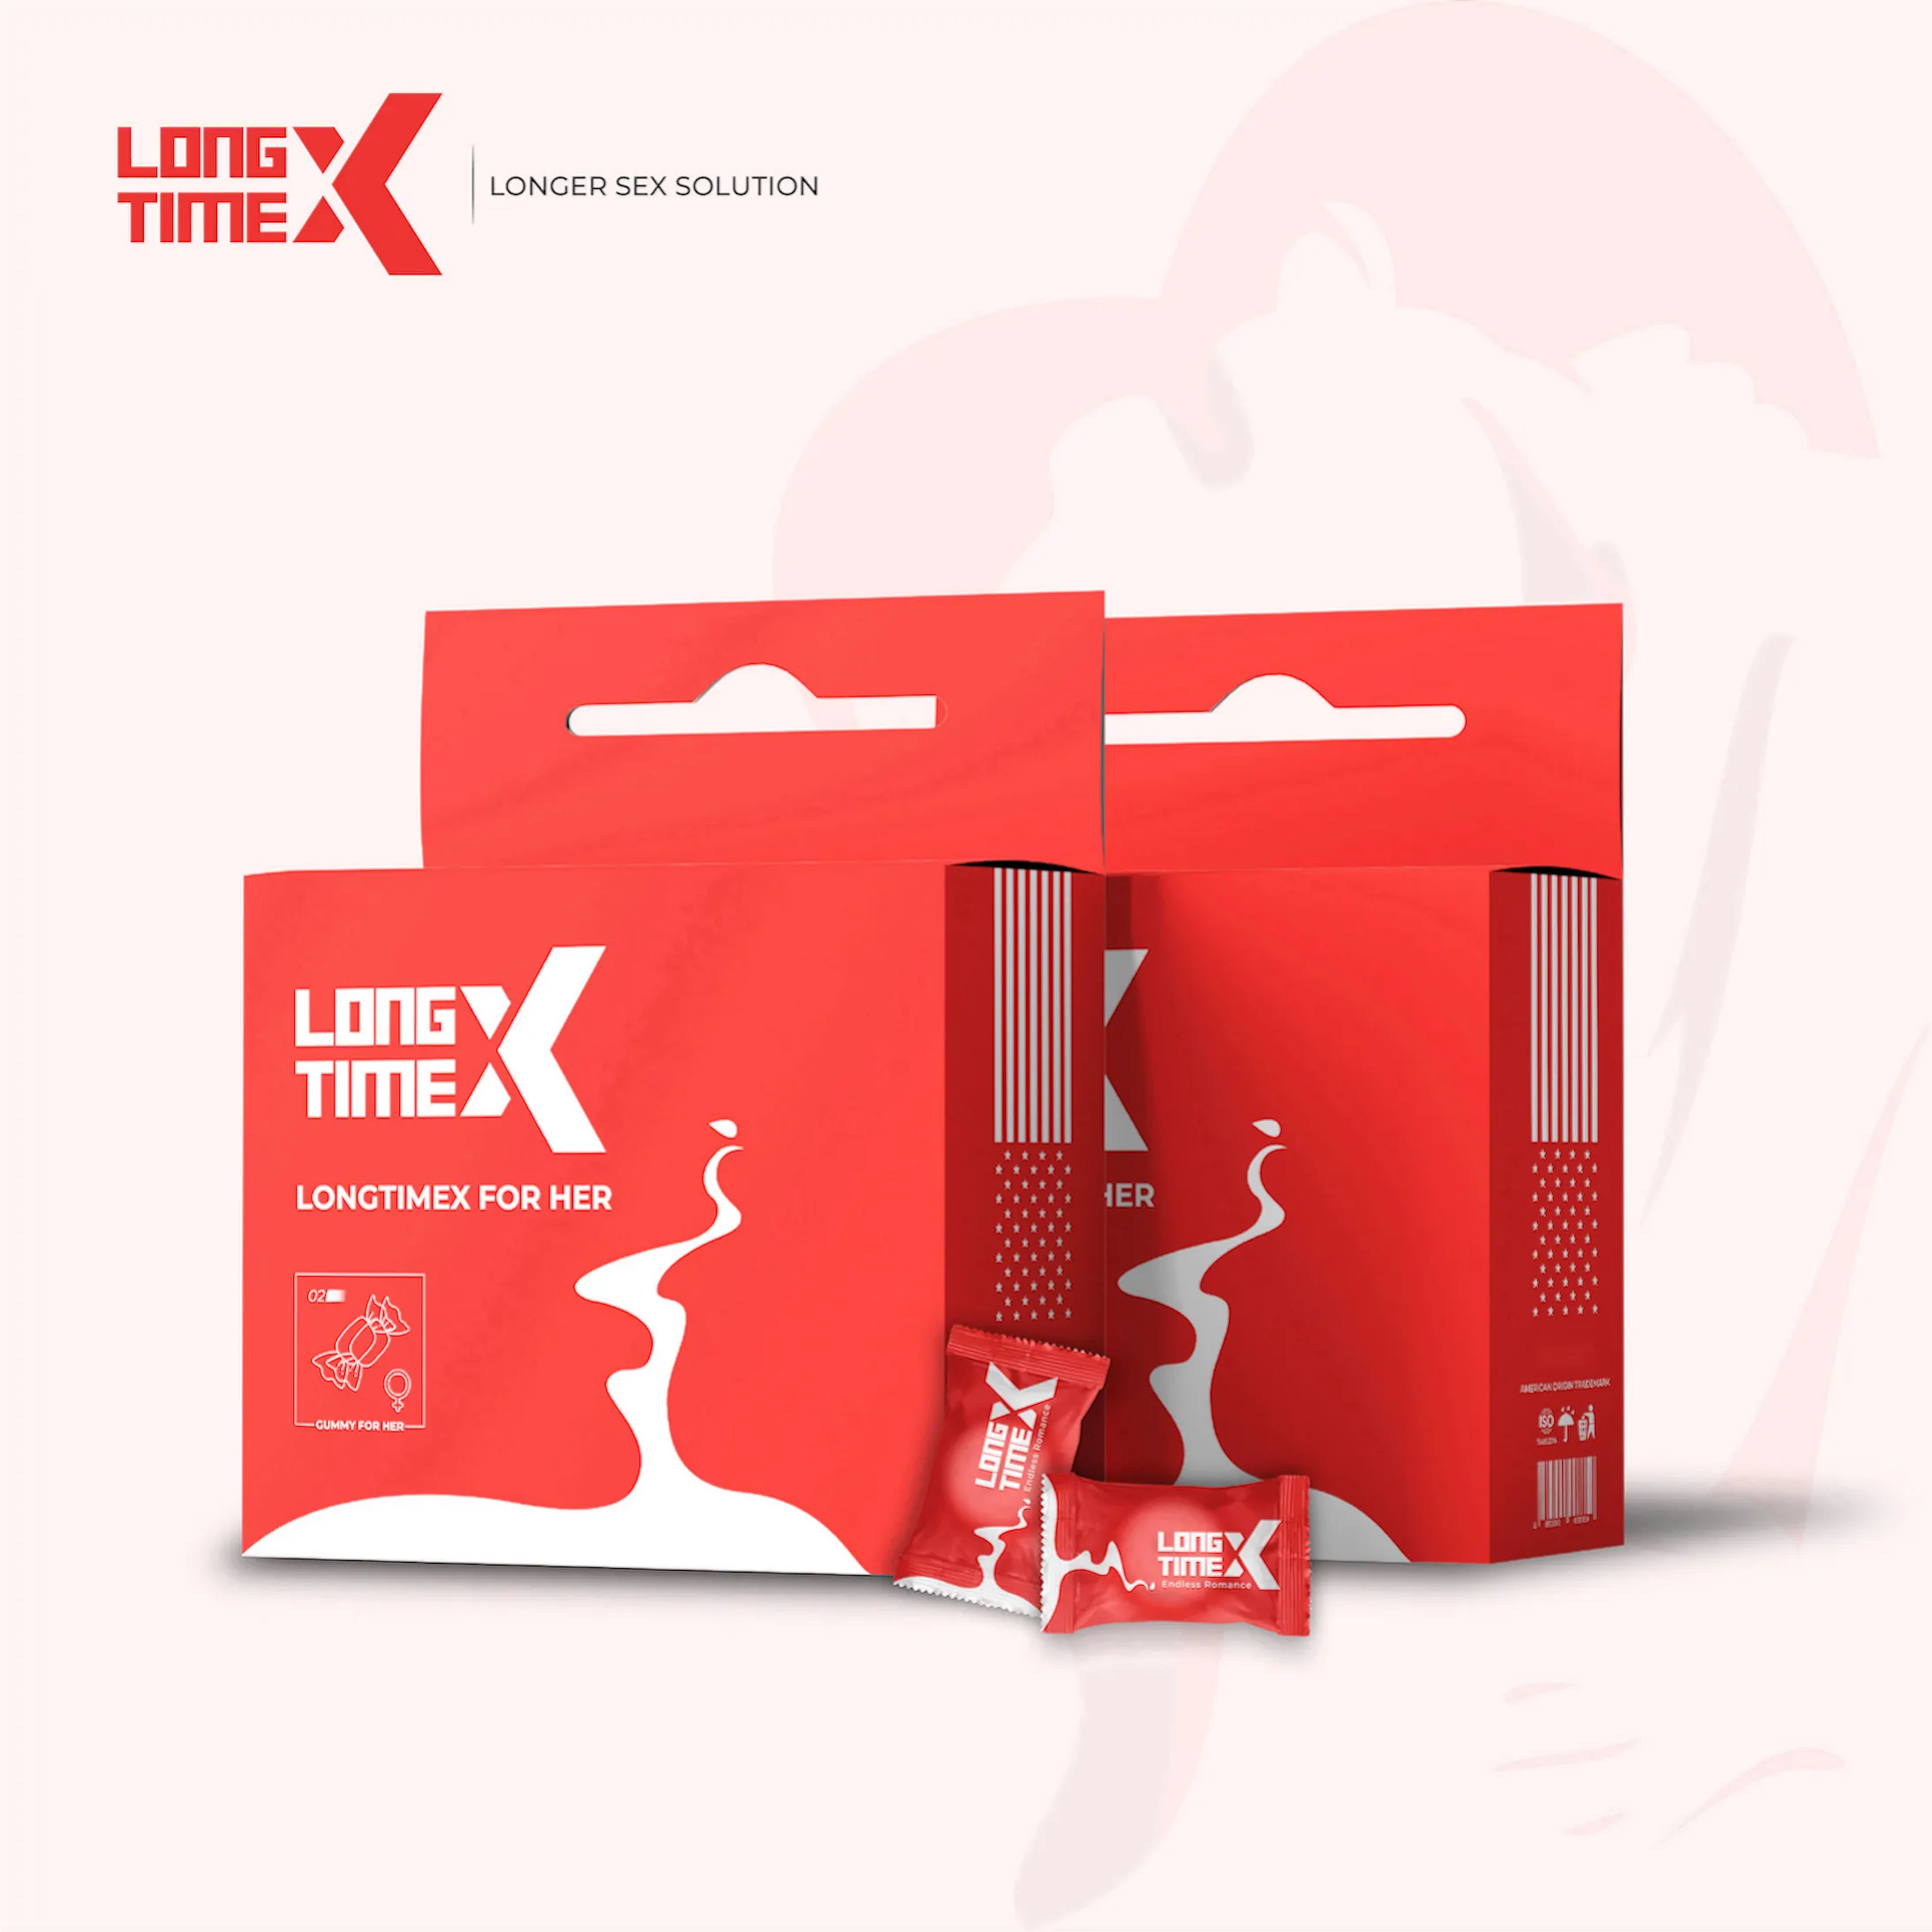 LongtimeX vendedores quentes gomoso masculino sexual saúde seguro impulsionador suplemento vitaminas herbal líbido outros produtos brinquedos sexuais para homens